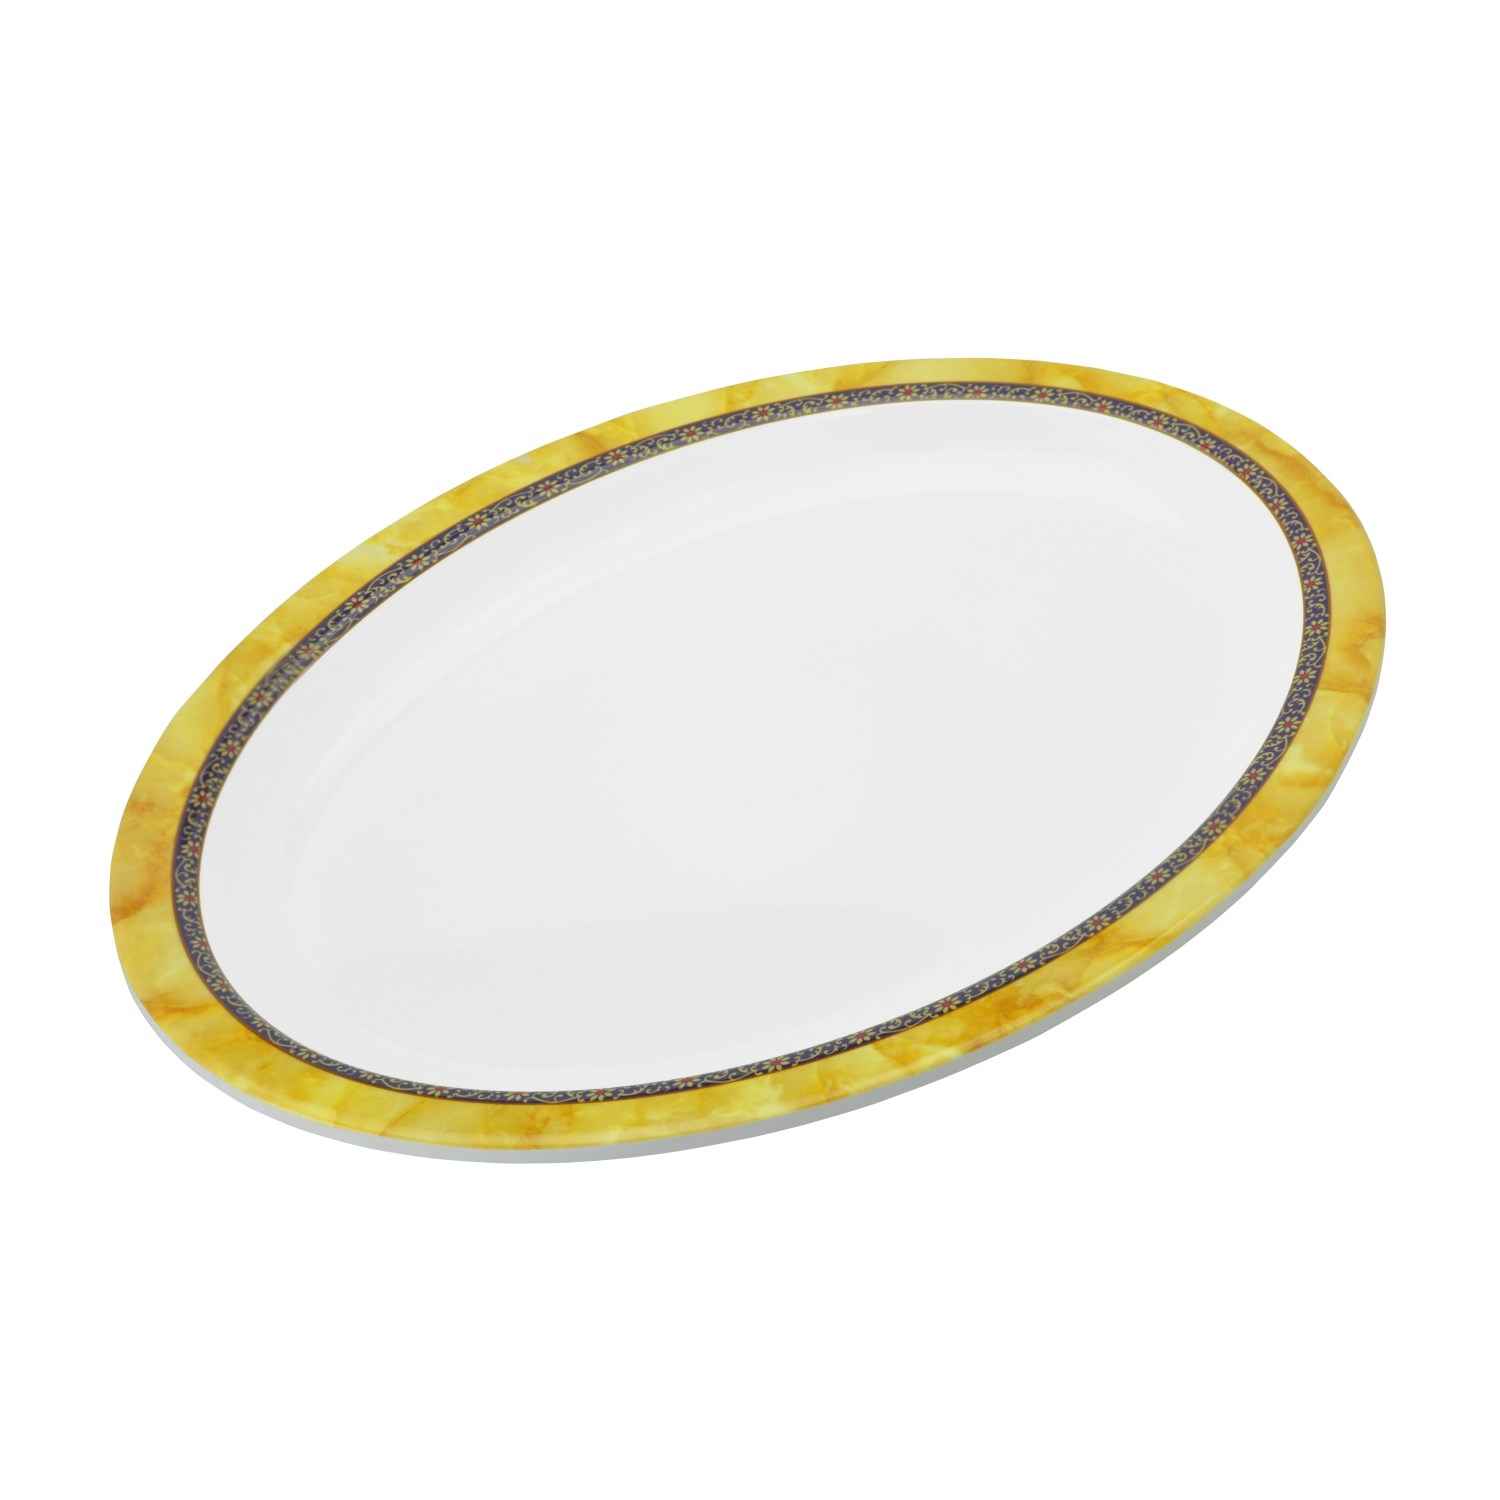 Dinewell Melamine Oval Serving Platter